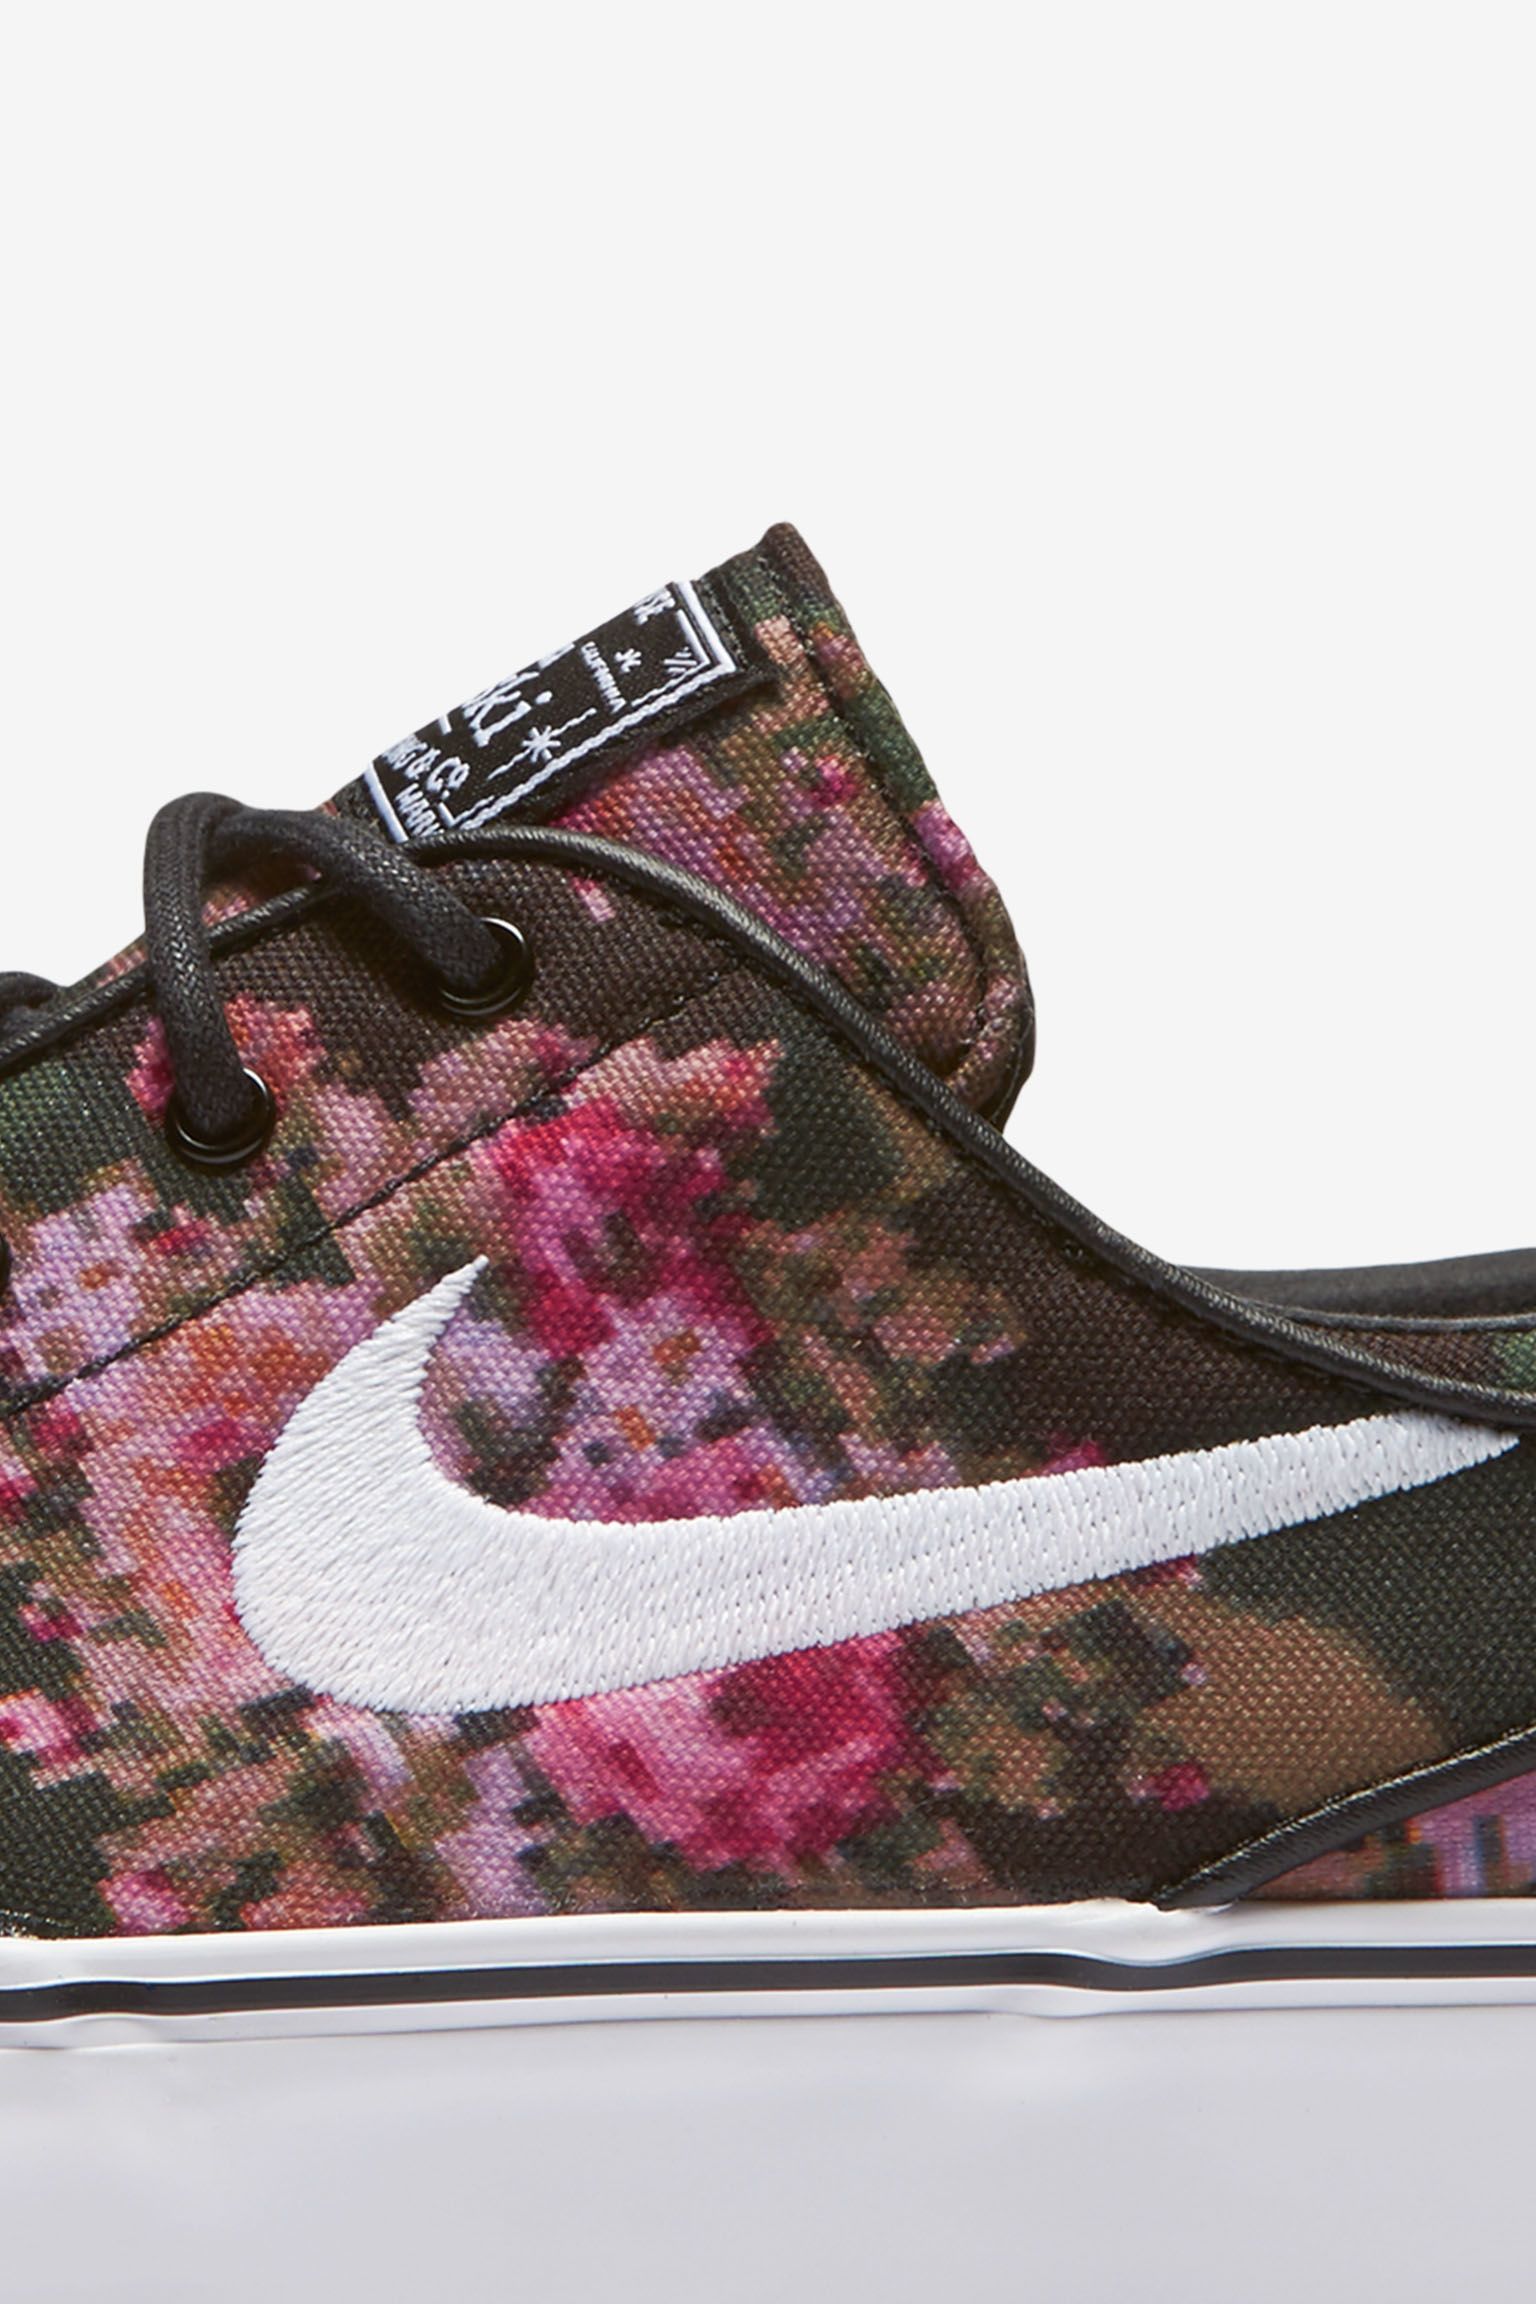 hacer los deberes Feudo patata Nike Zoom Stefan Janoski 'Digi-Floral'. Nike SNKRS ES